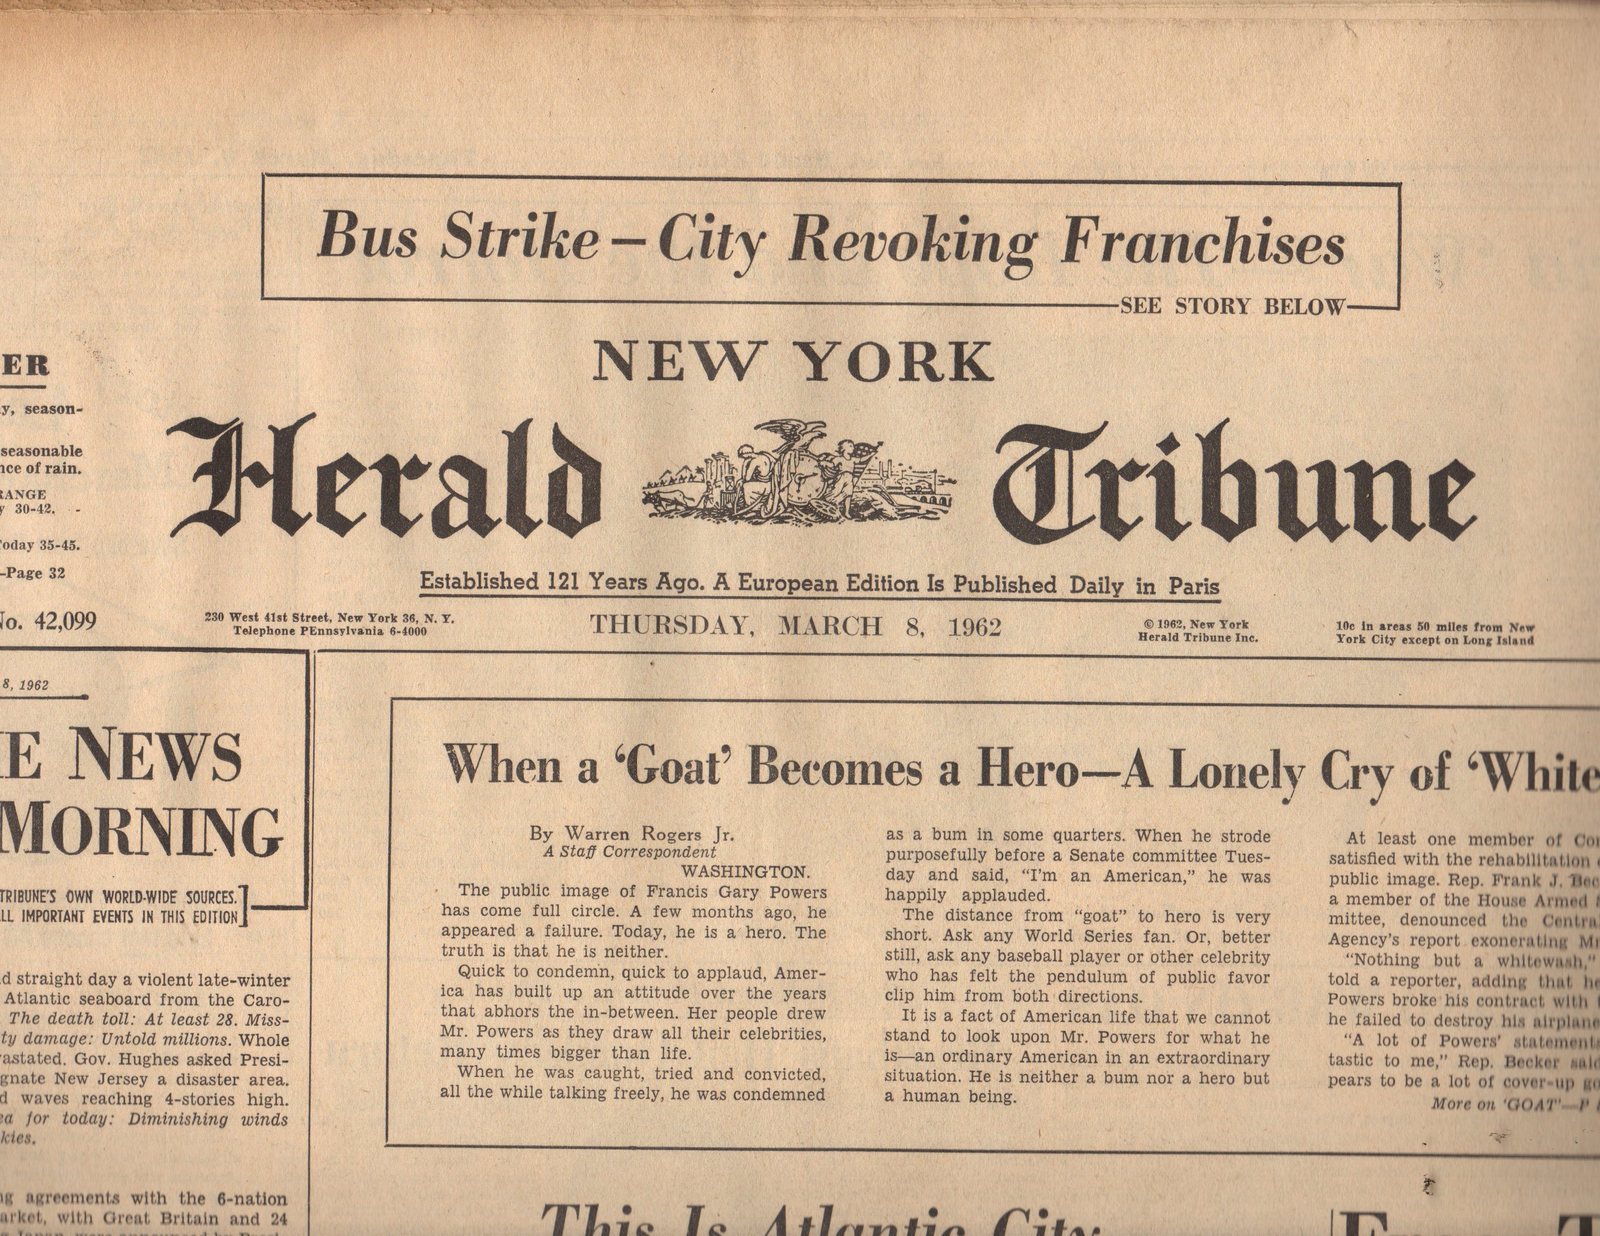 New york newspapers. The New York Herald газета 19 век. Нью-Йорк Трибьюн 1841. New York Tribune 19 век.